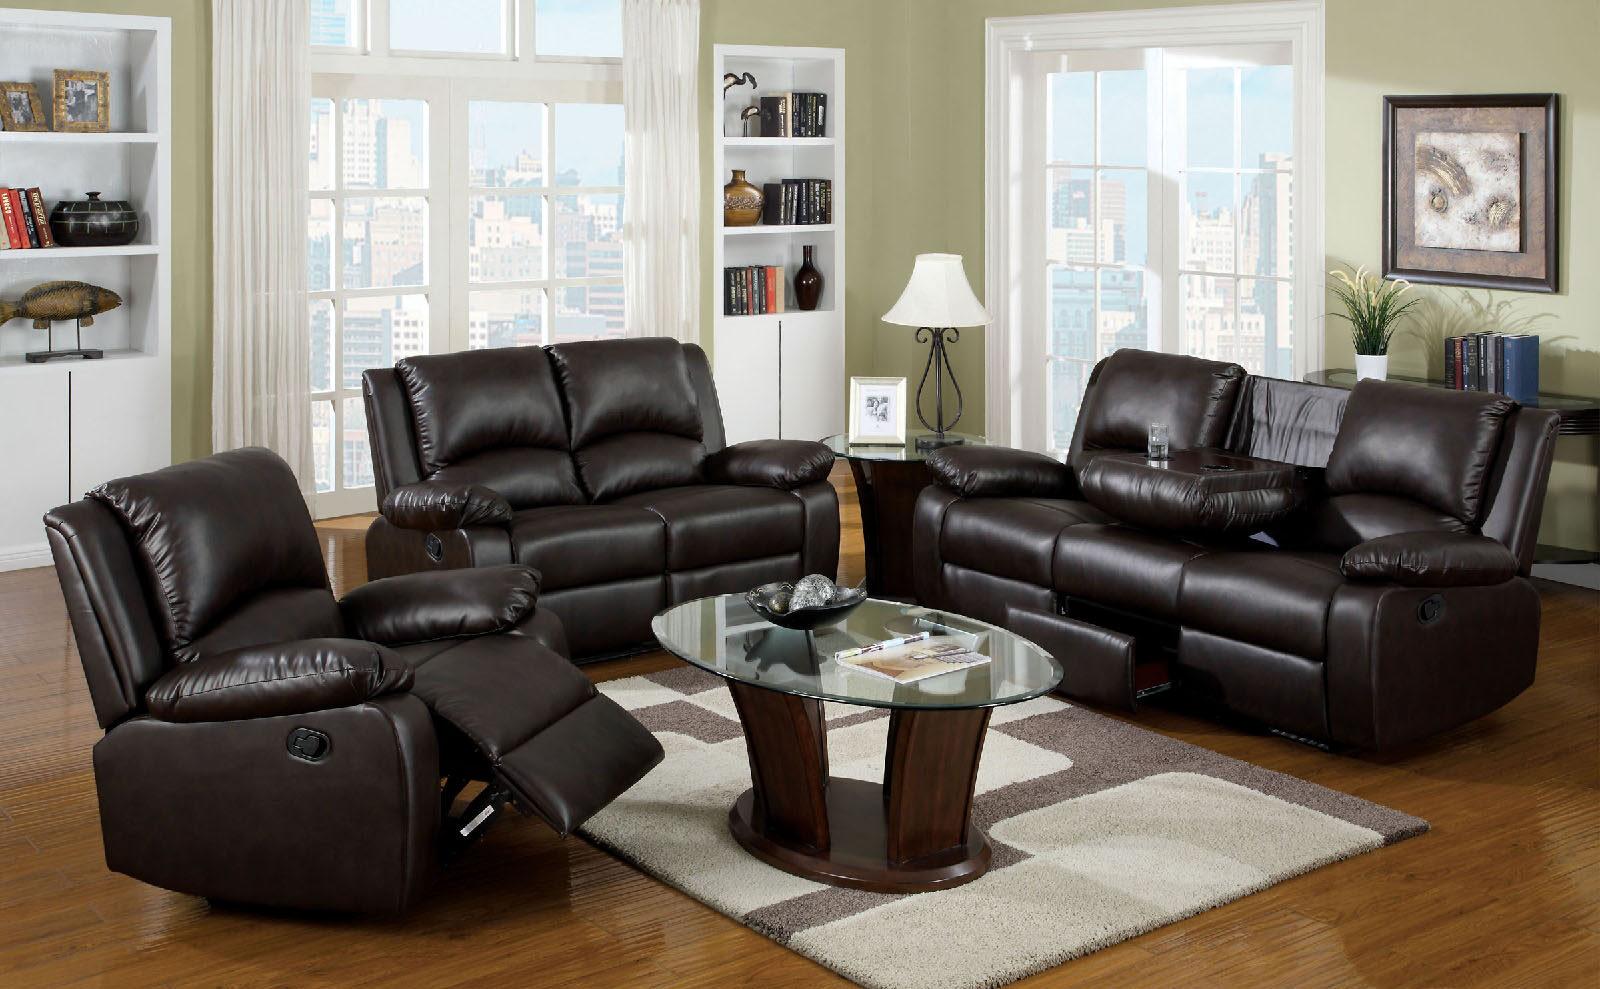 

    
Transitional Rustic Dark Brown Leatherette Recliner Living Room Set 3pcs Furniture of America Oxford
